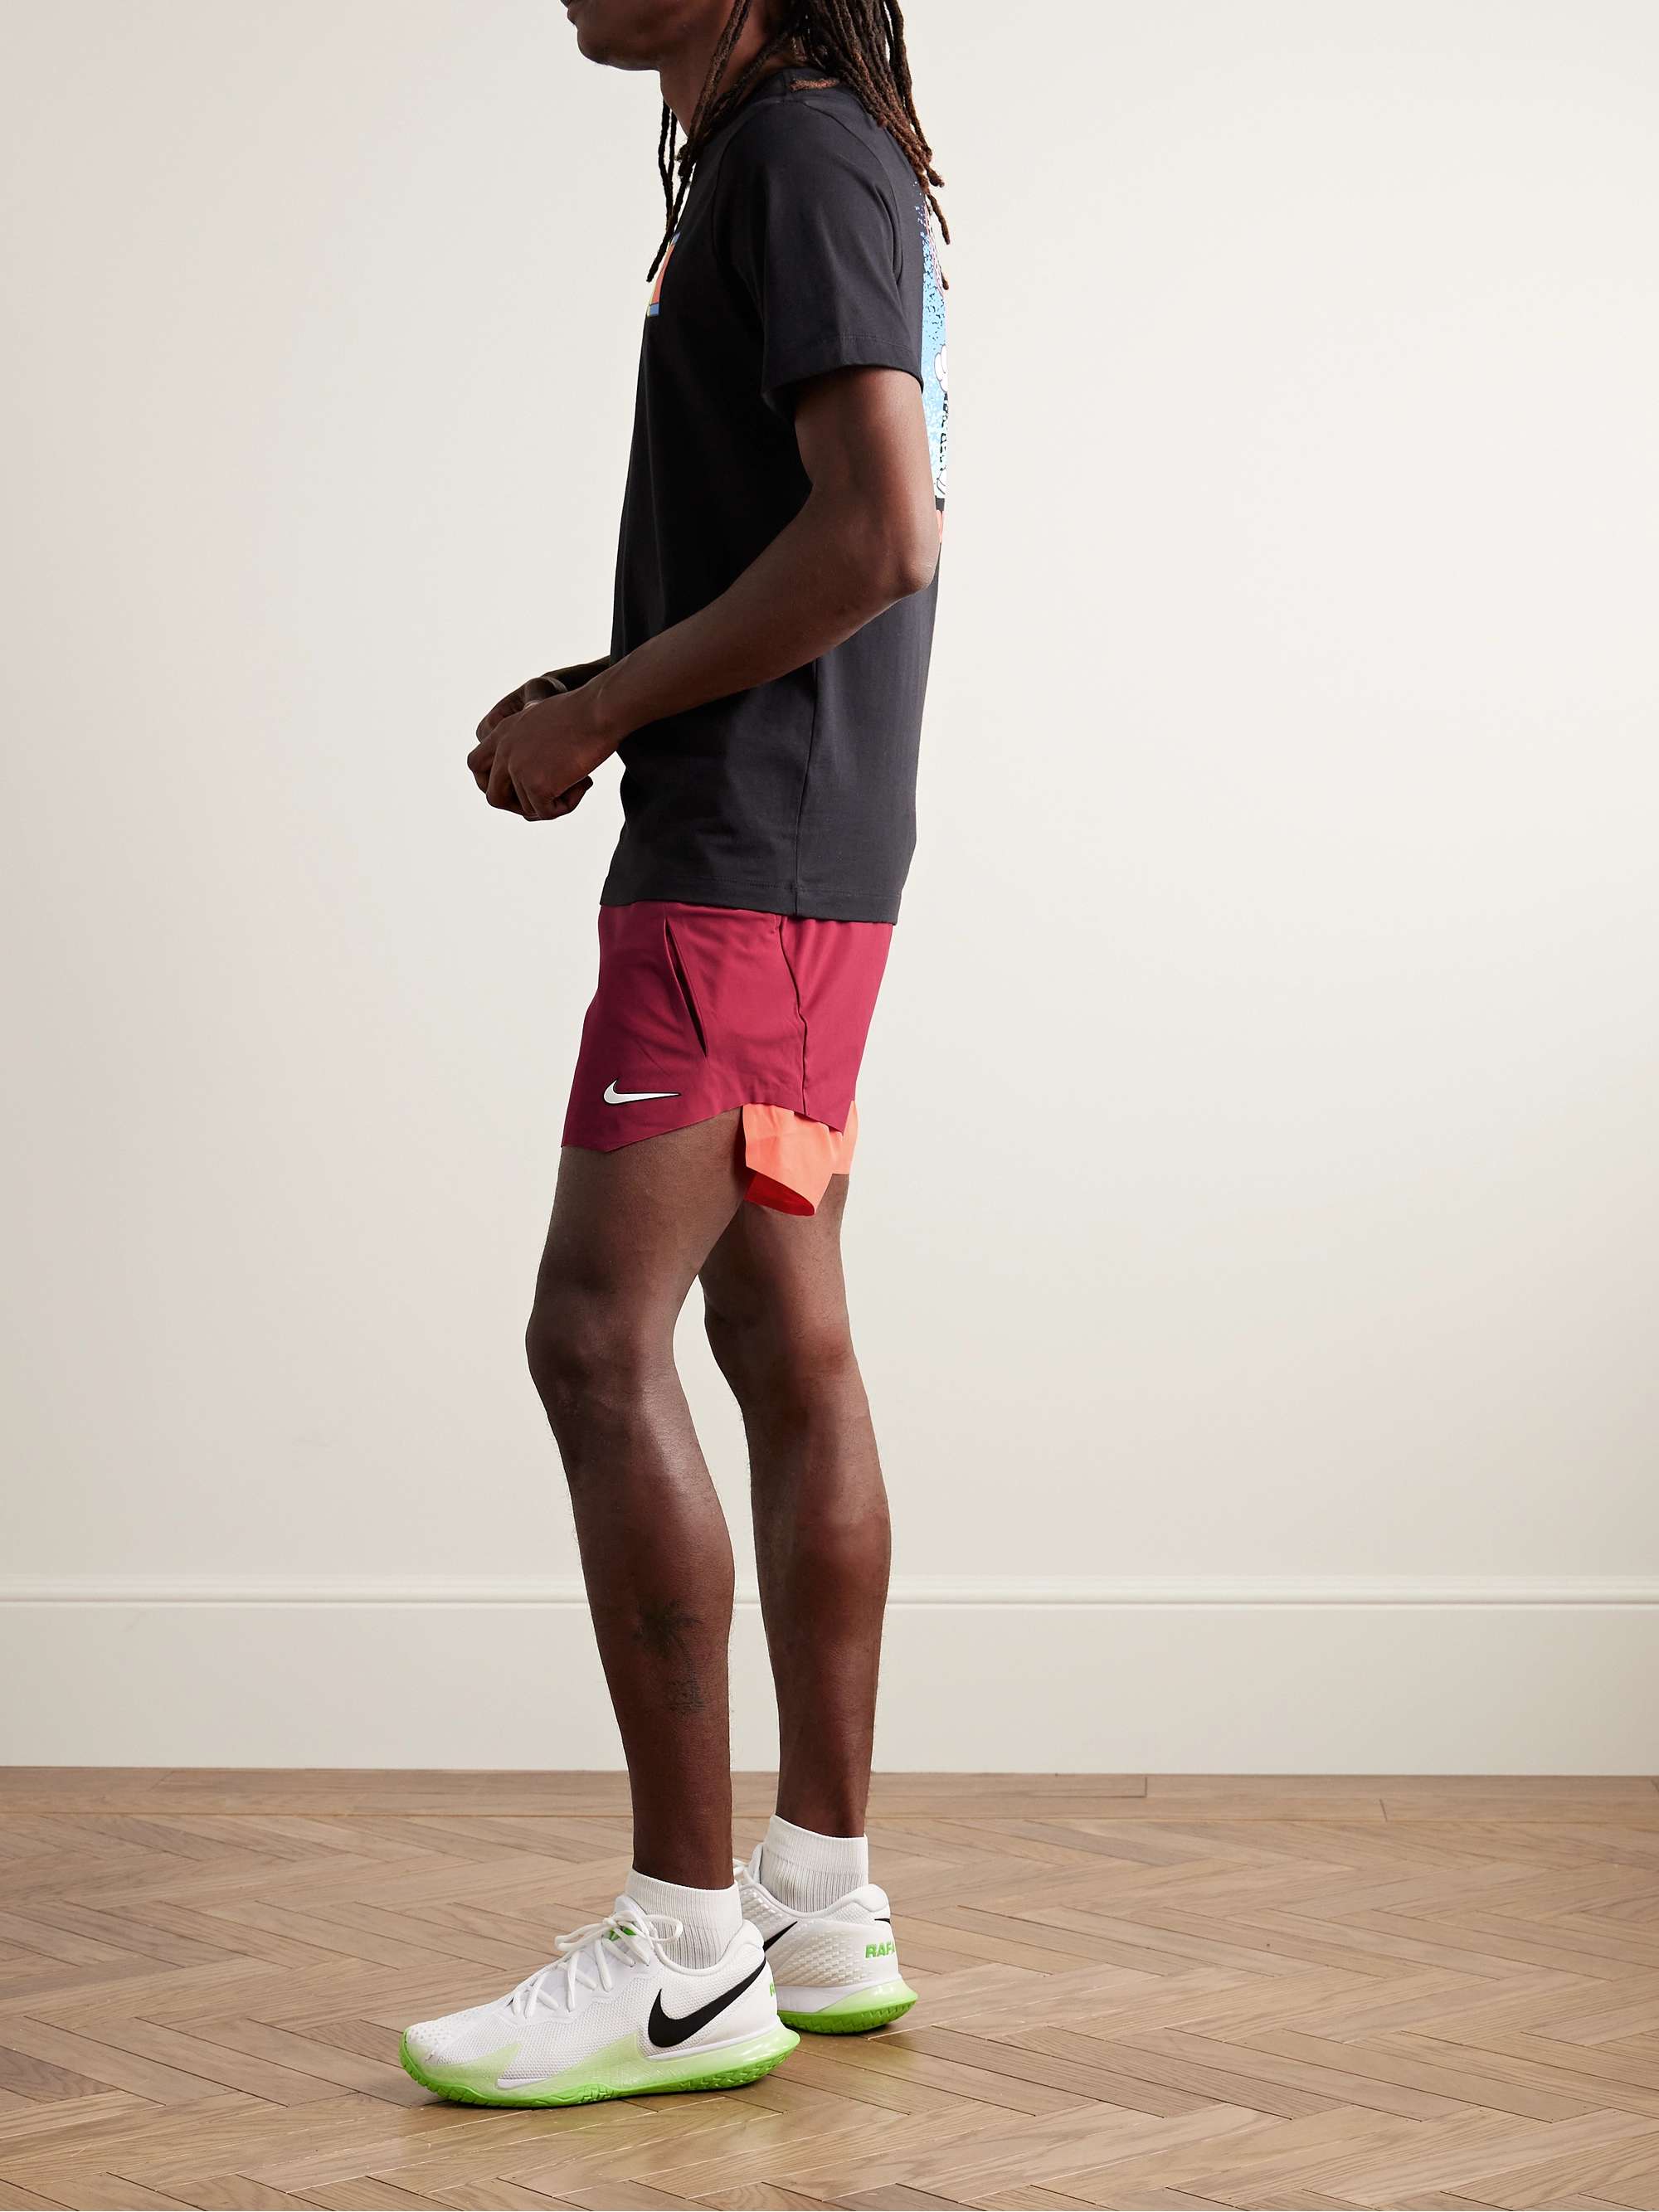 NikeCourt Men's Tennis Trousers. Nike AT